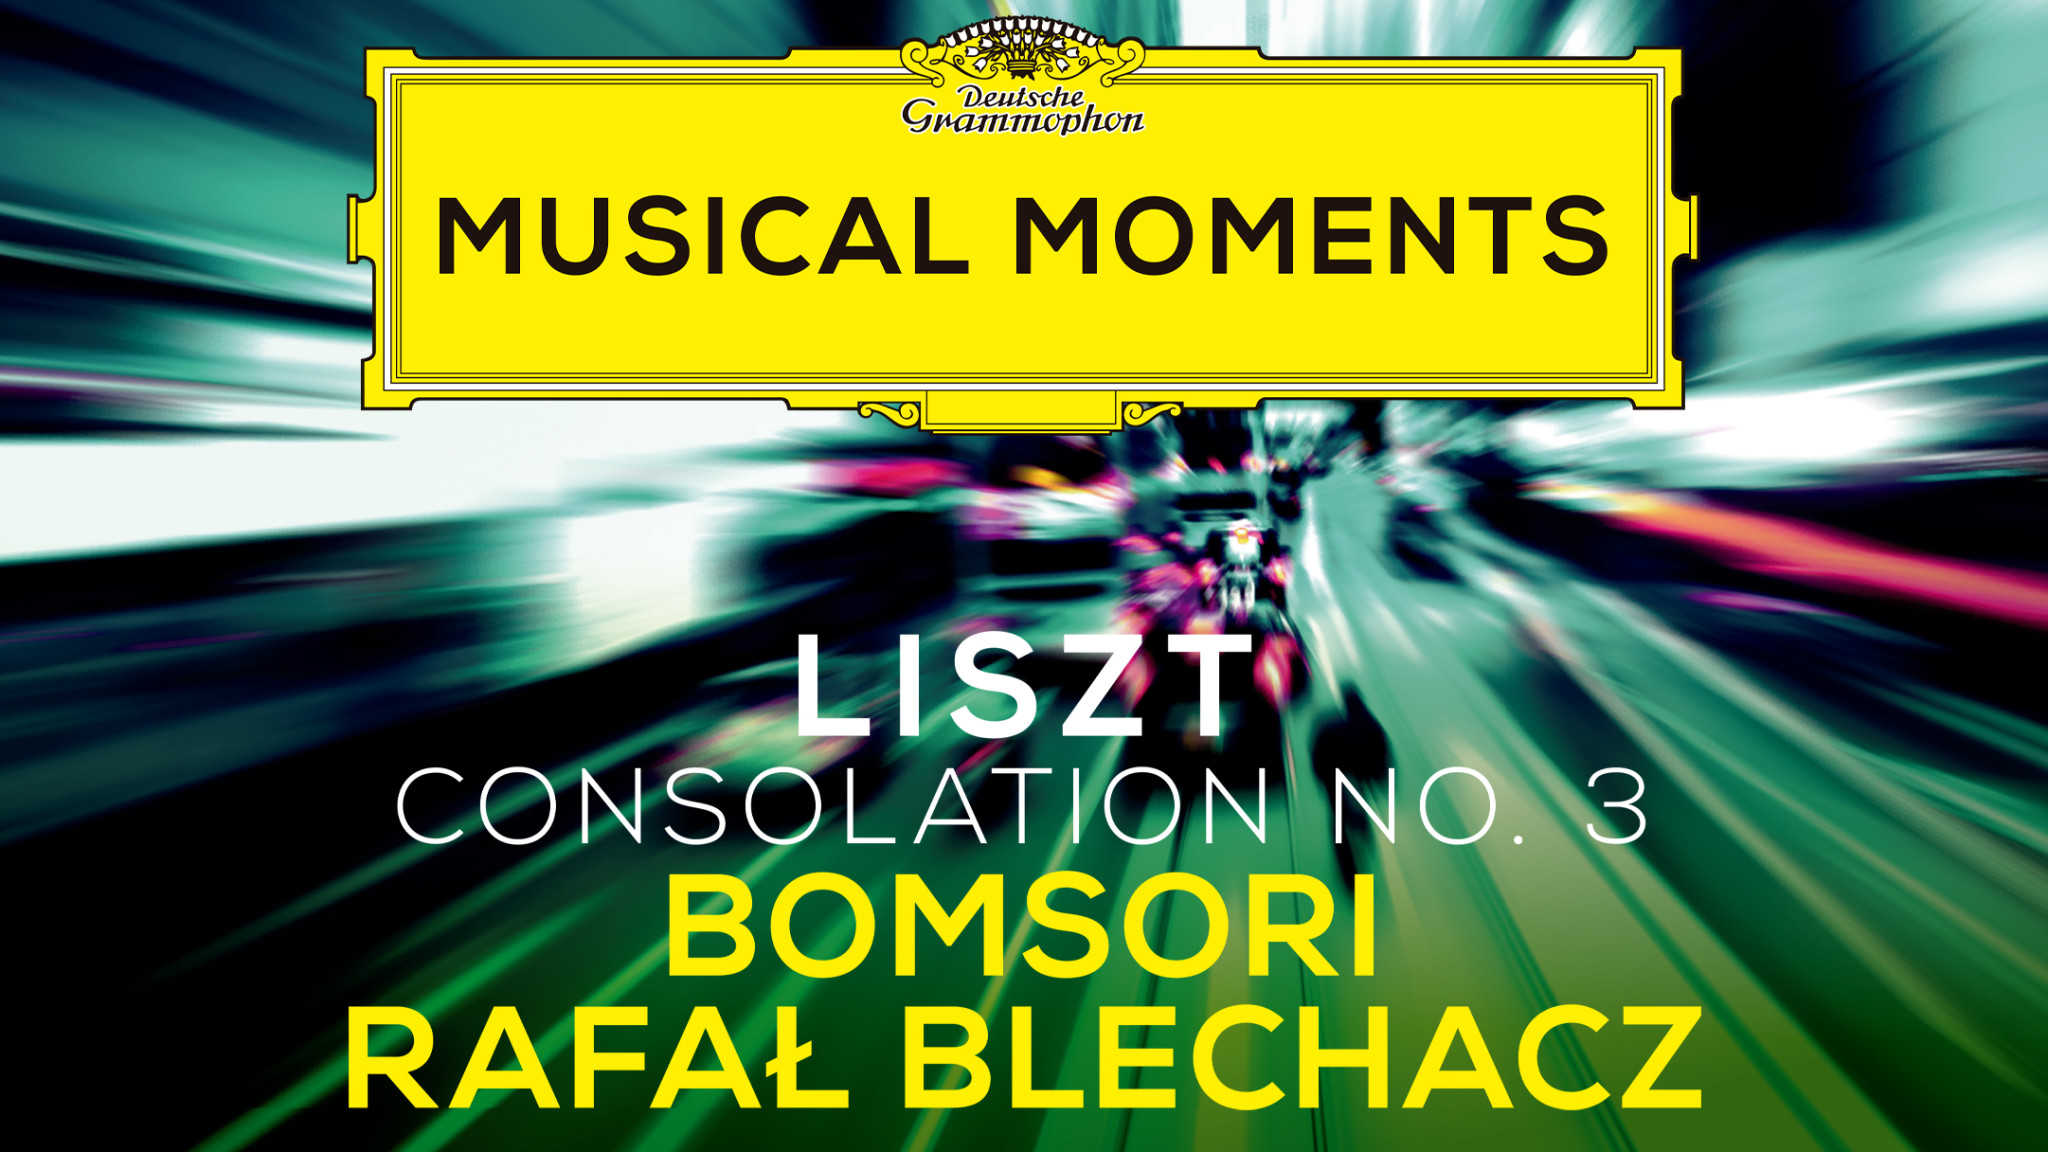 Bomsori & Rafał Blechacz  - Musical Moments 